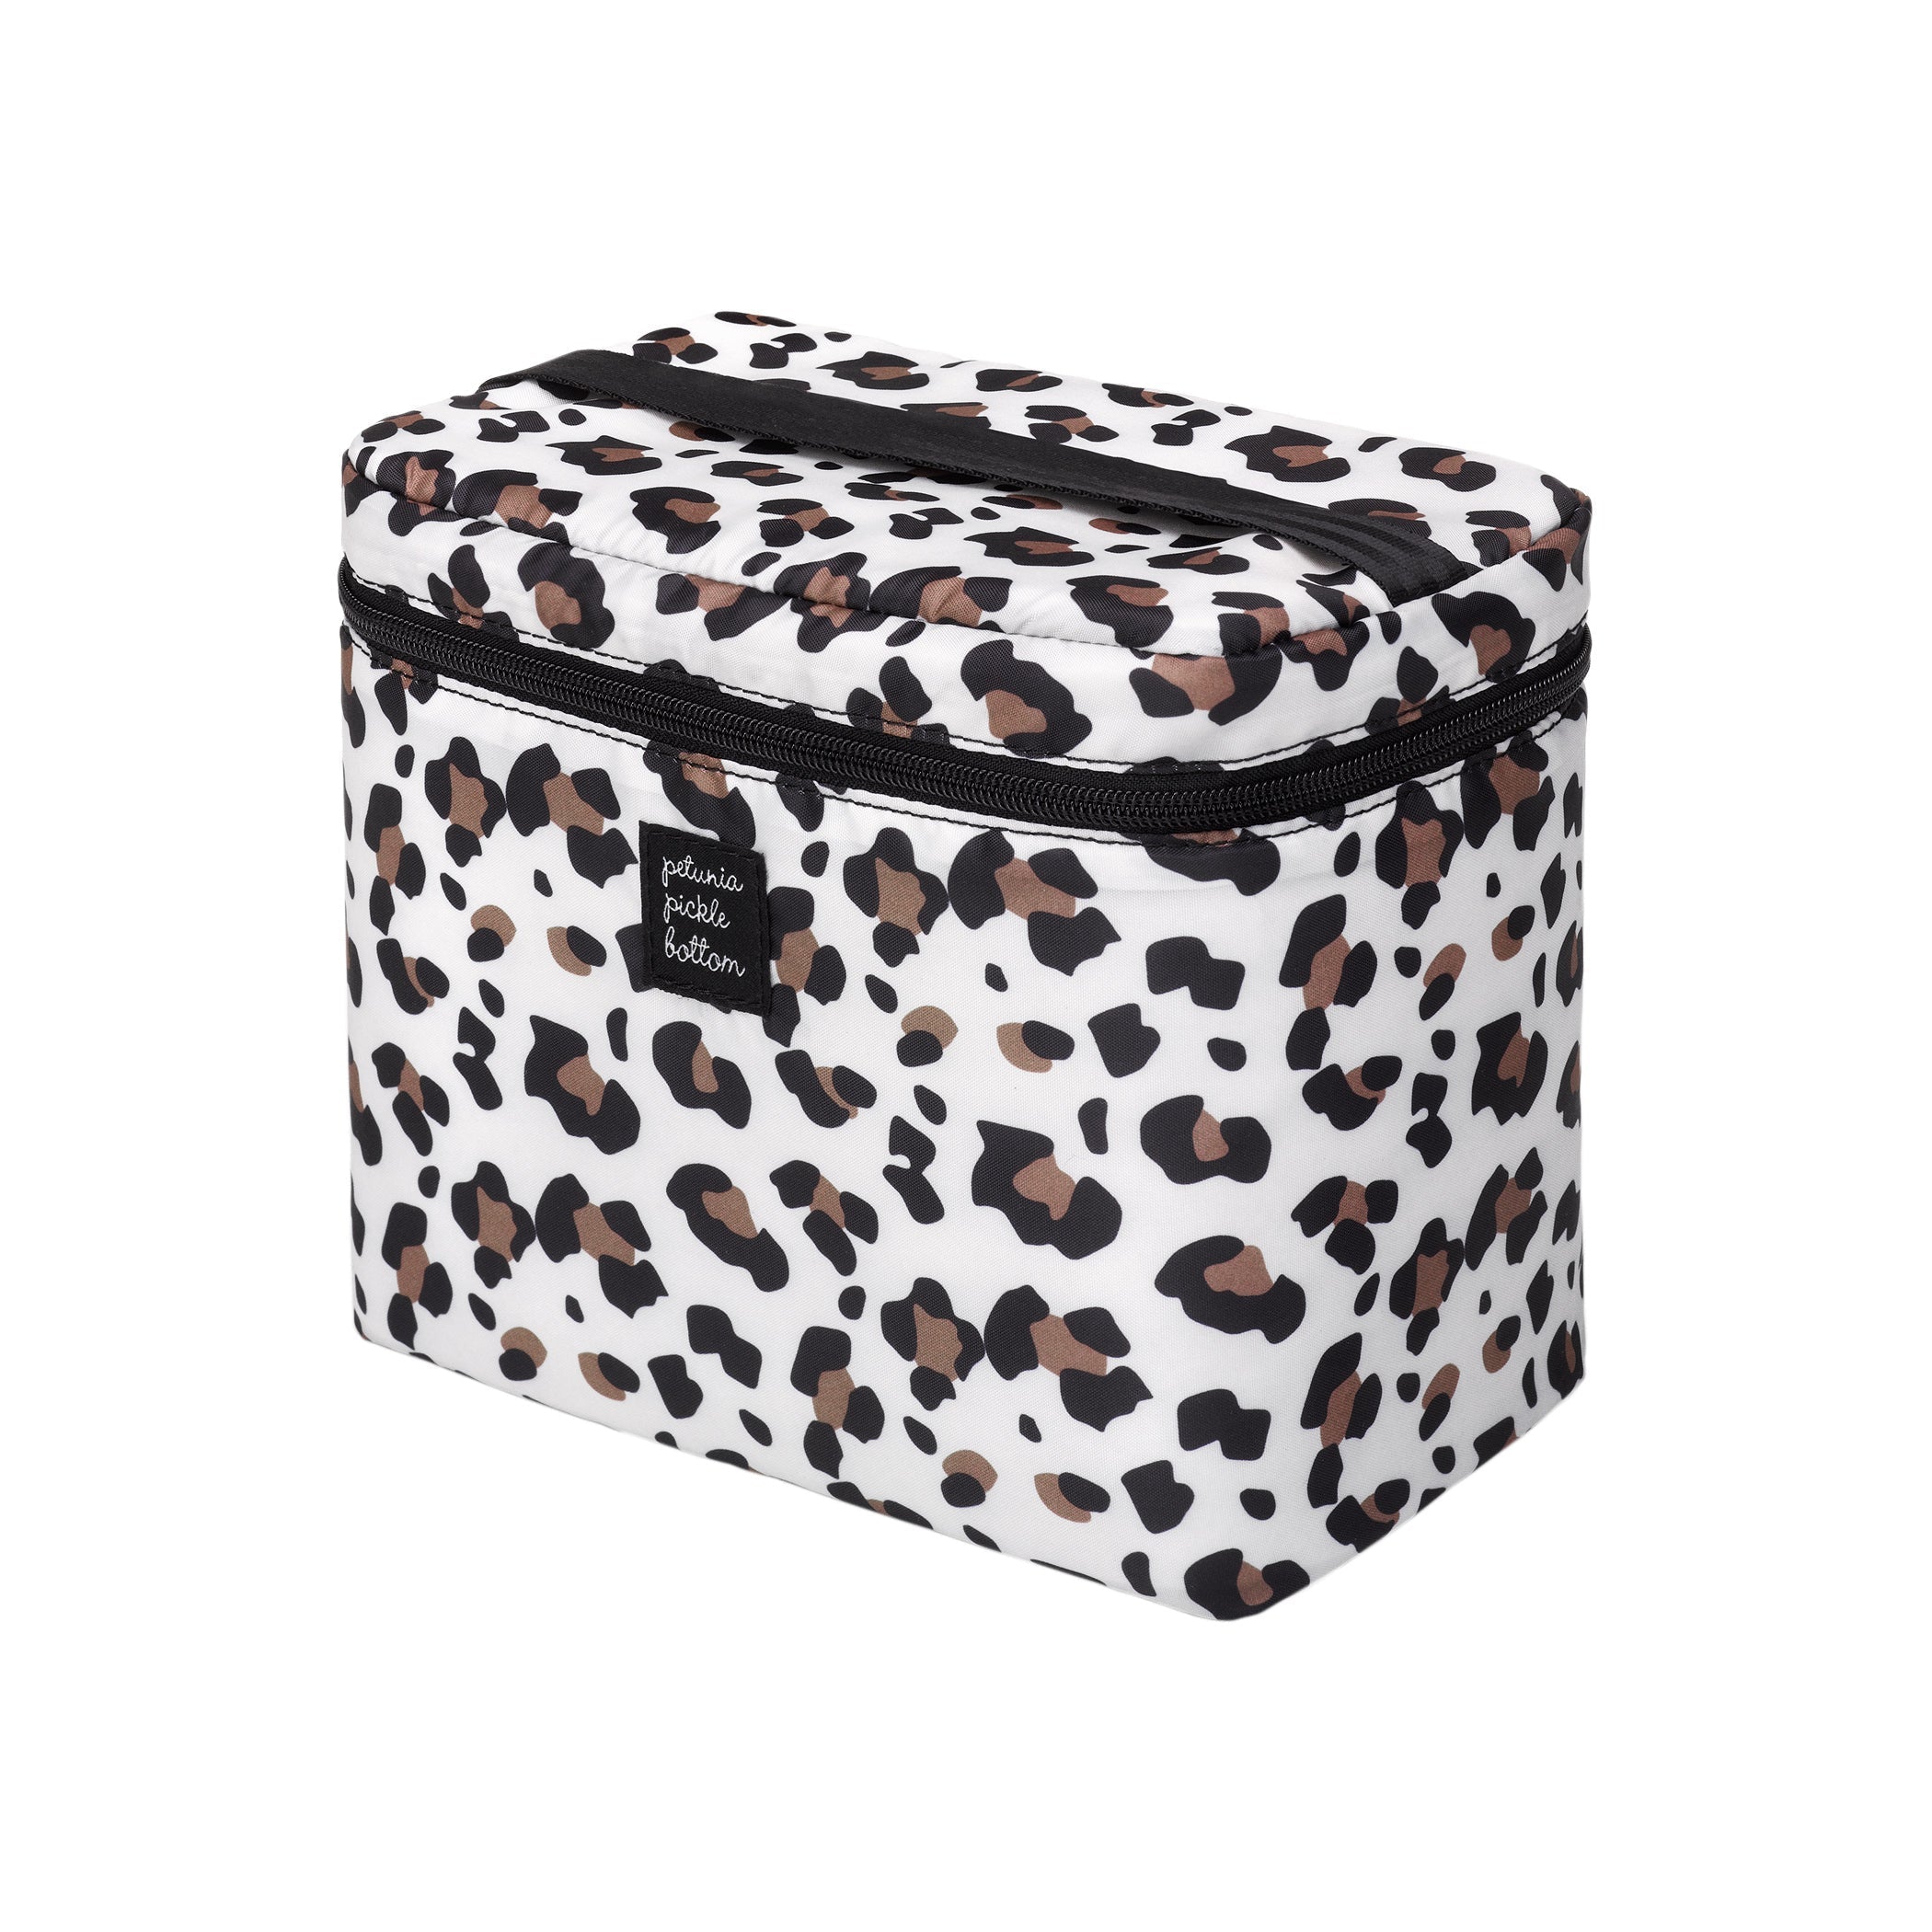 Petunia Pickle Bottom Prompt Pump Kit in Moon Leopard Breast Pump Bag